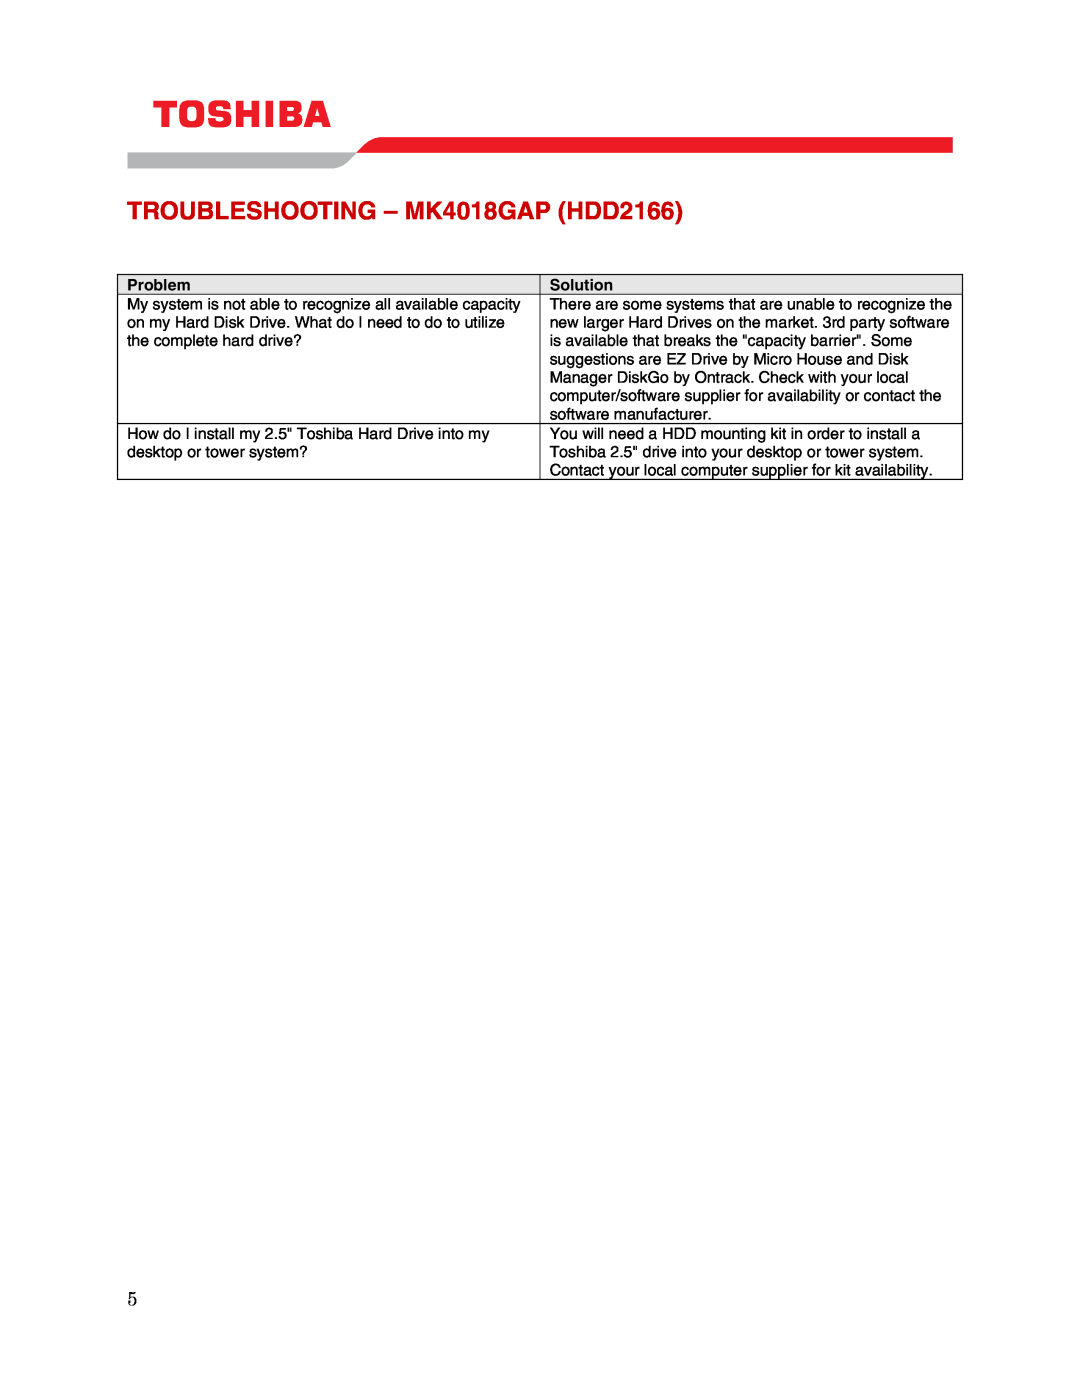 Toshiba user manual TROUBLESHOOTING - MK4018GAP HDD2166, Problem, Solution 